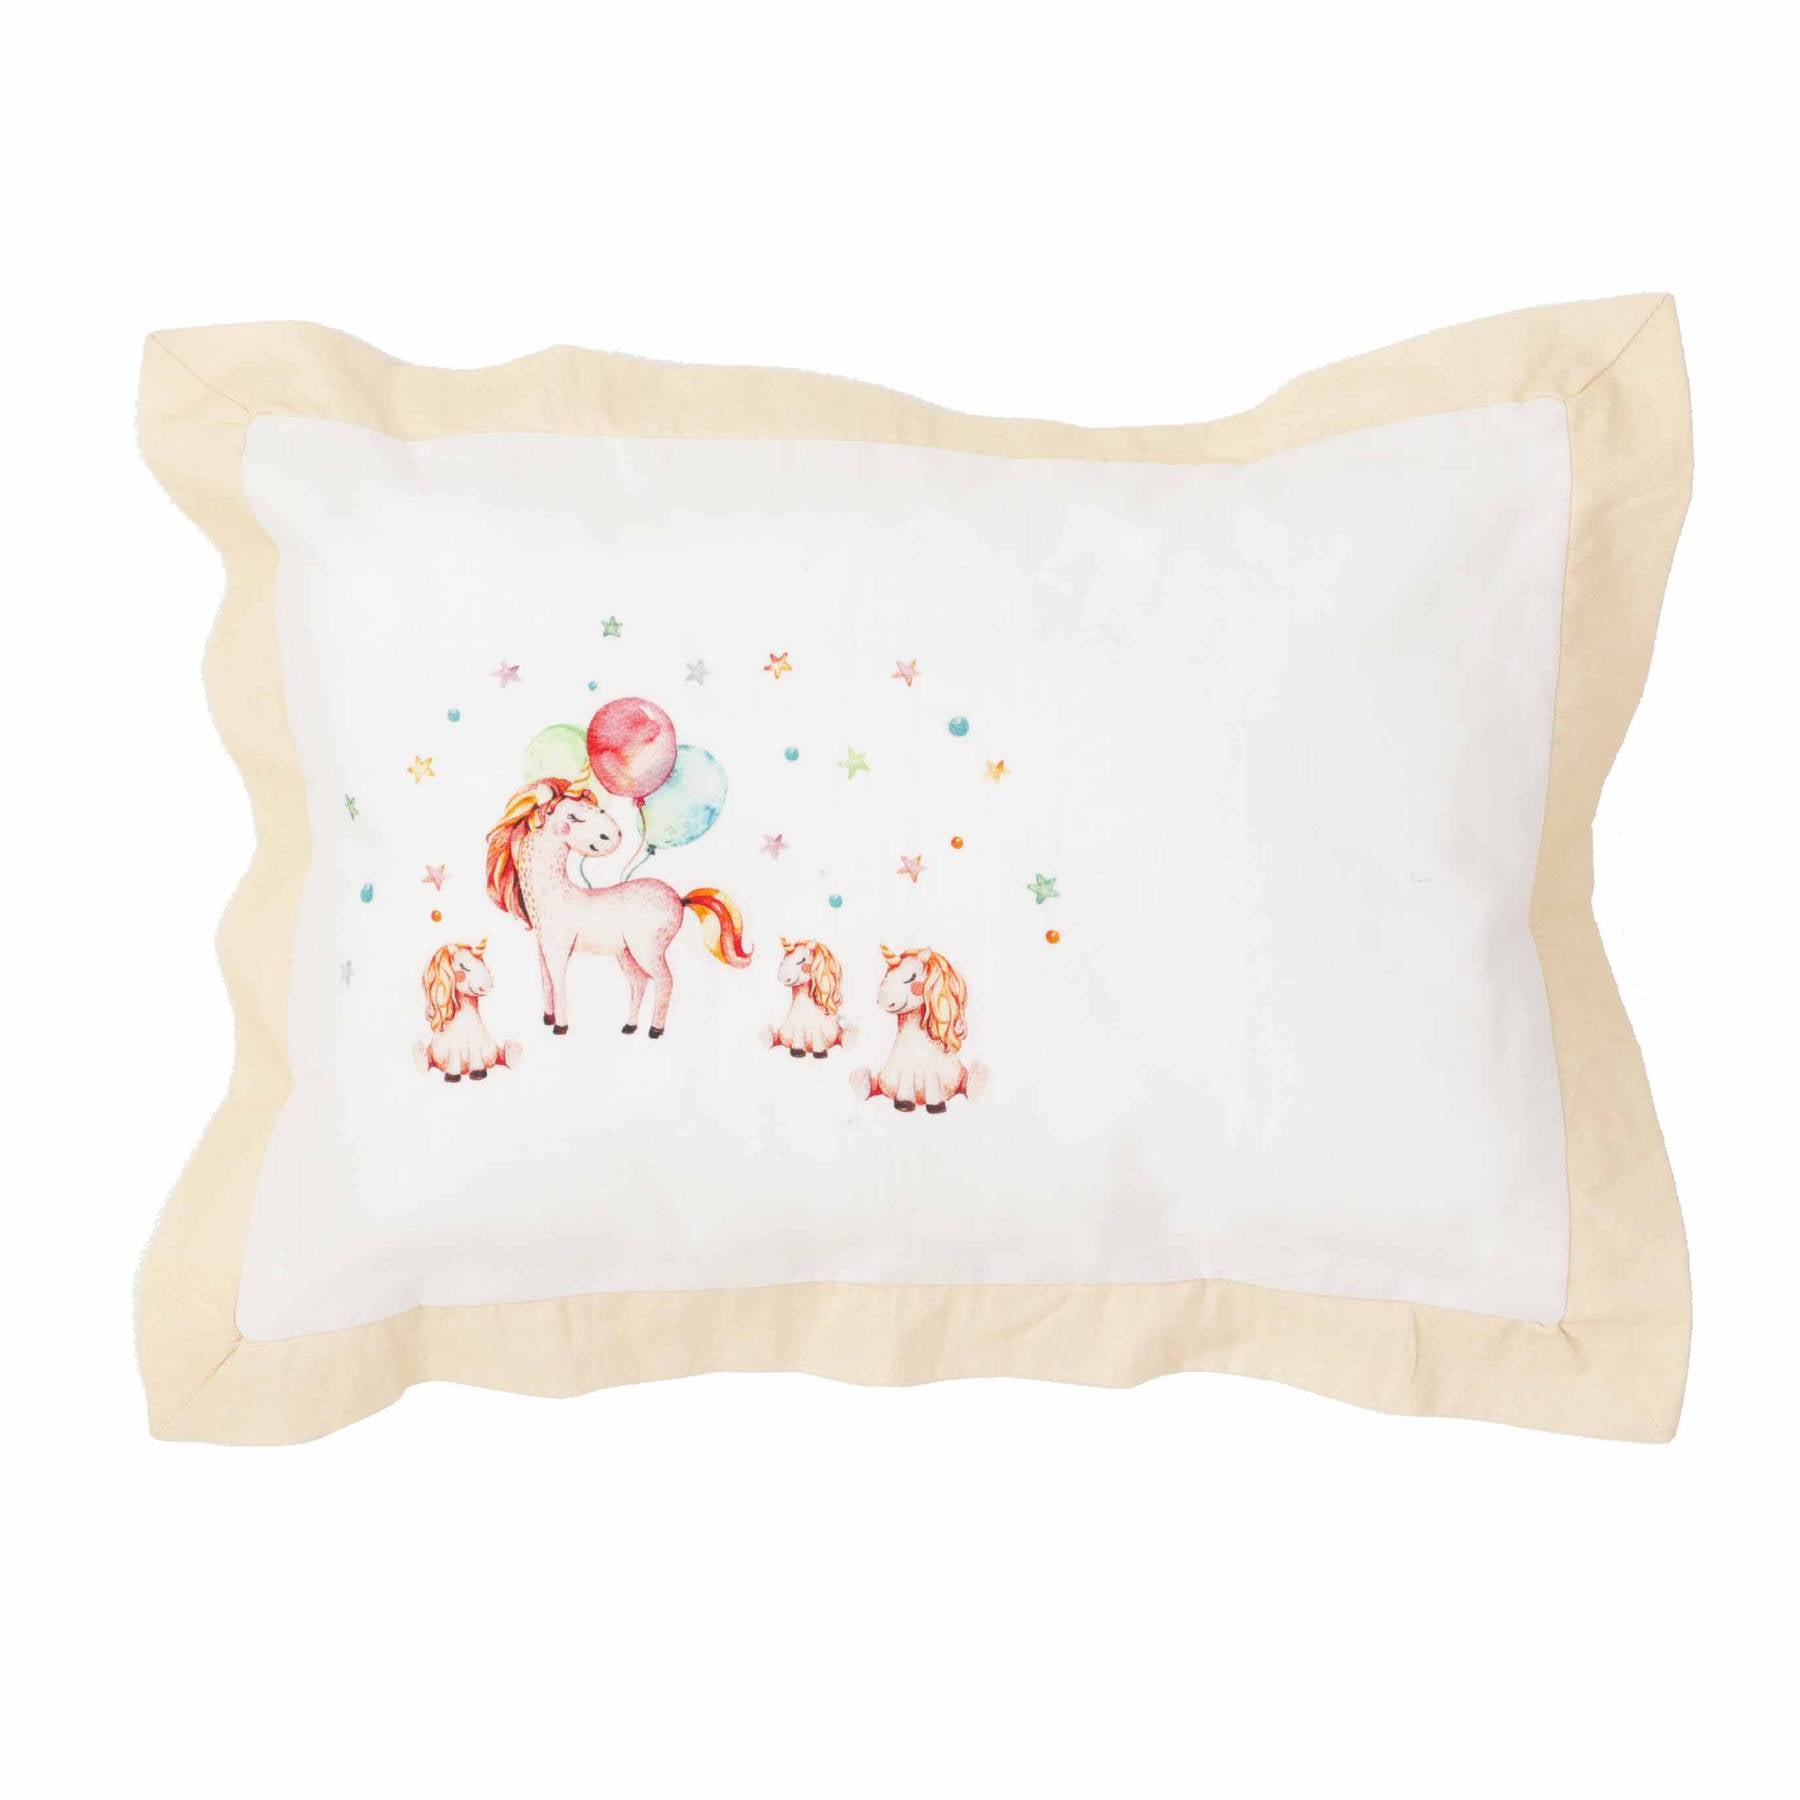 Miss Bella the Unicorn - Baby Pillow